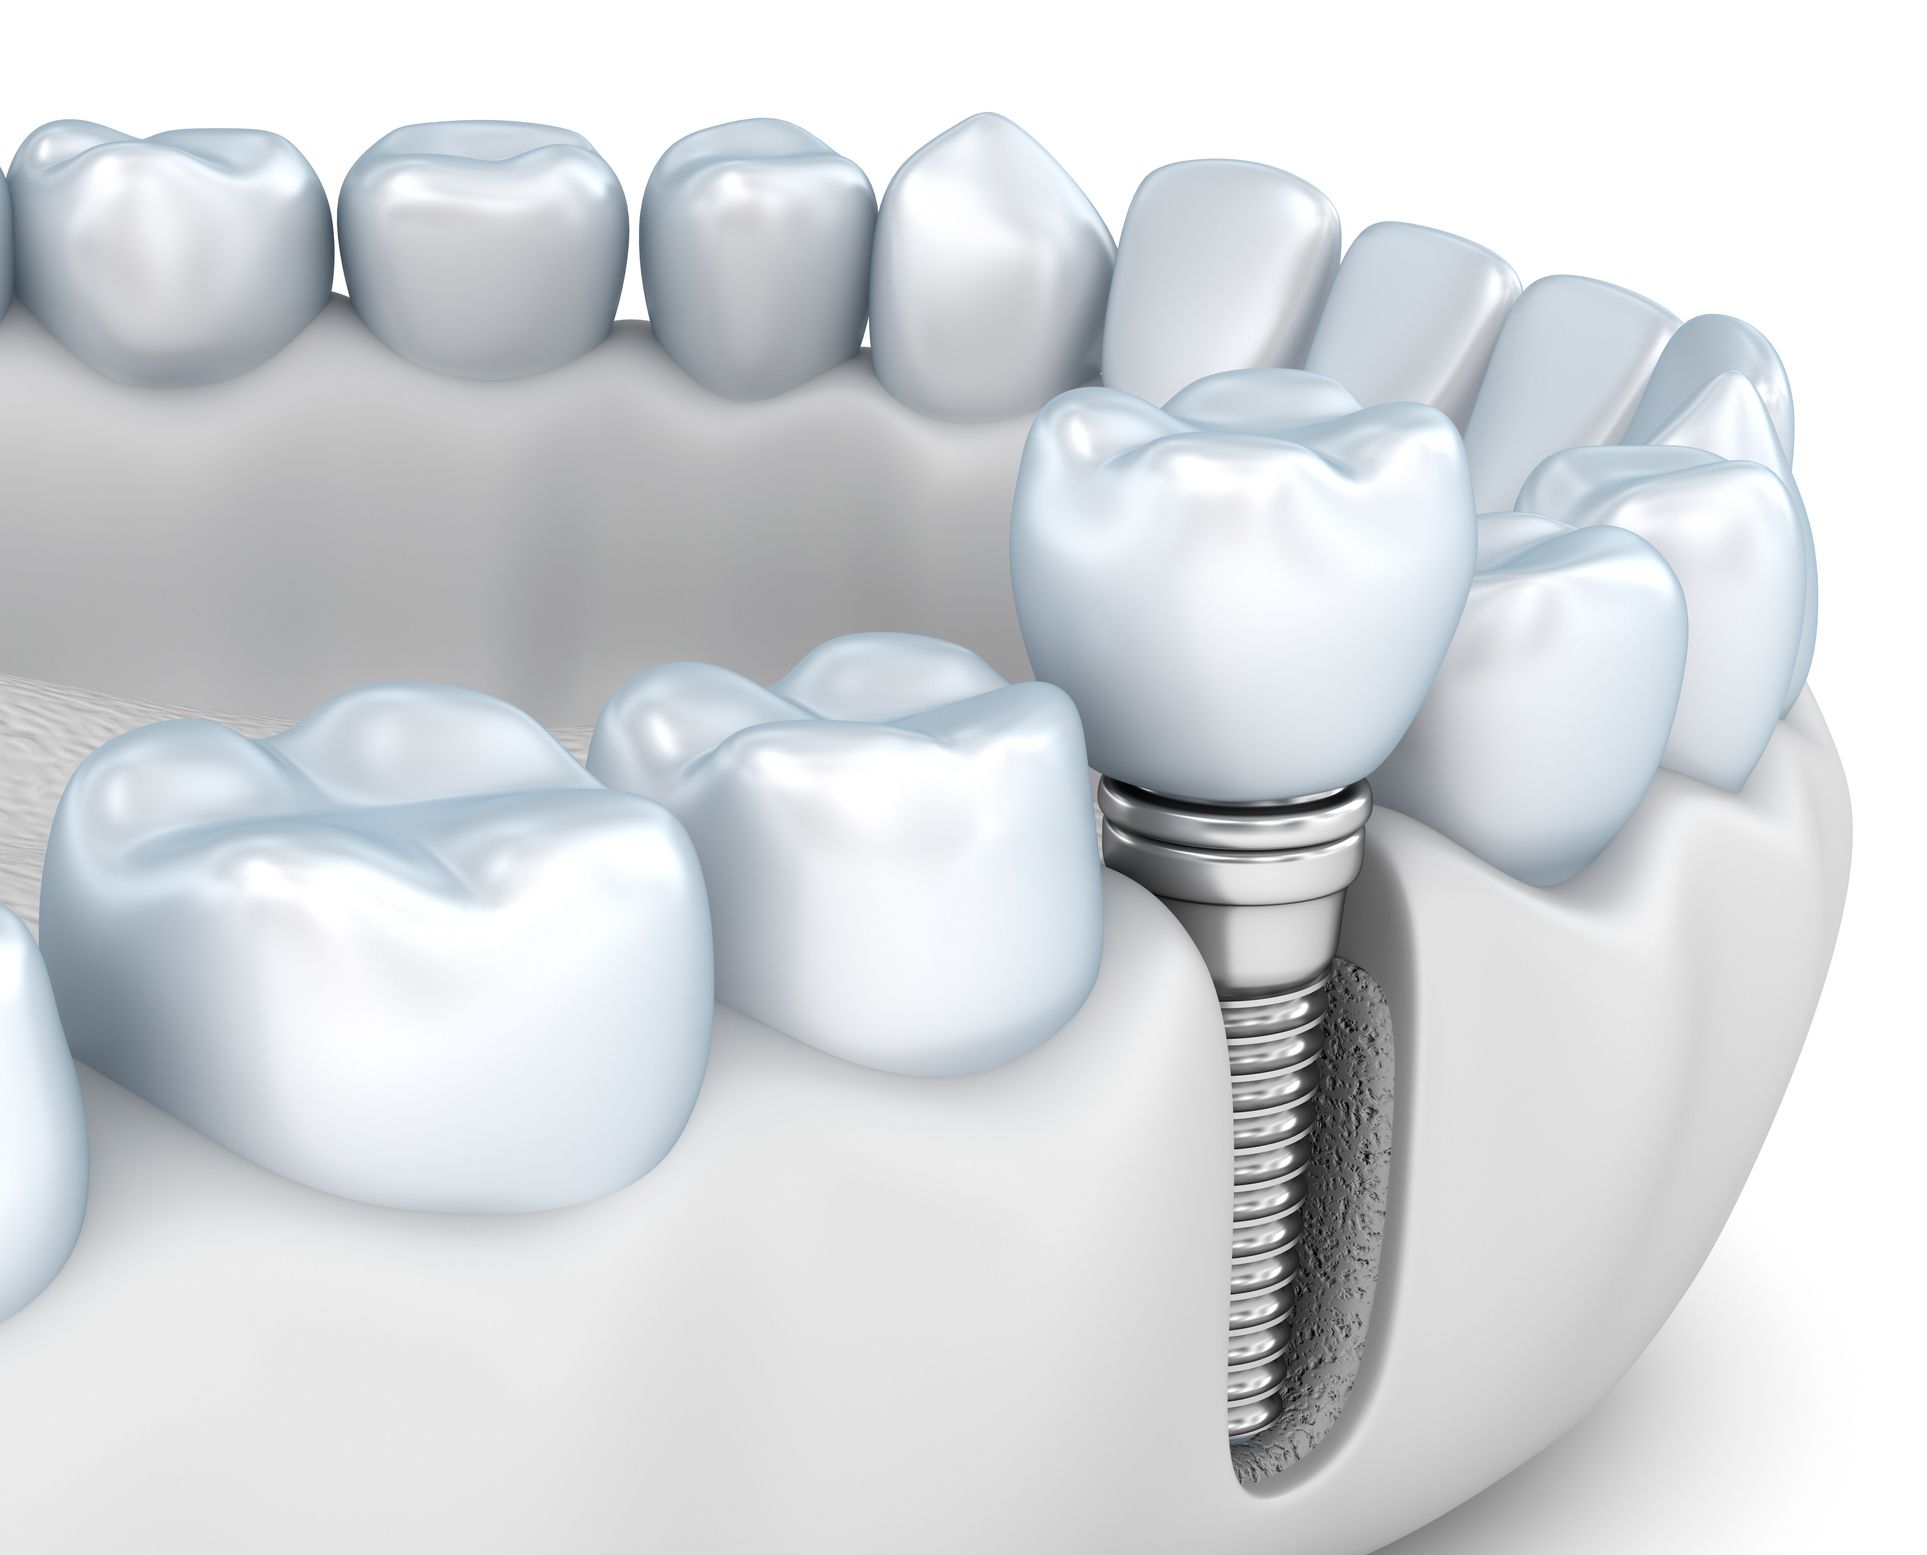 dental implants restore jawbone health in Baltimore Maryland